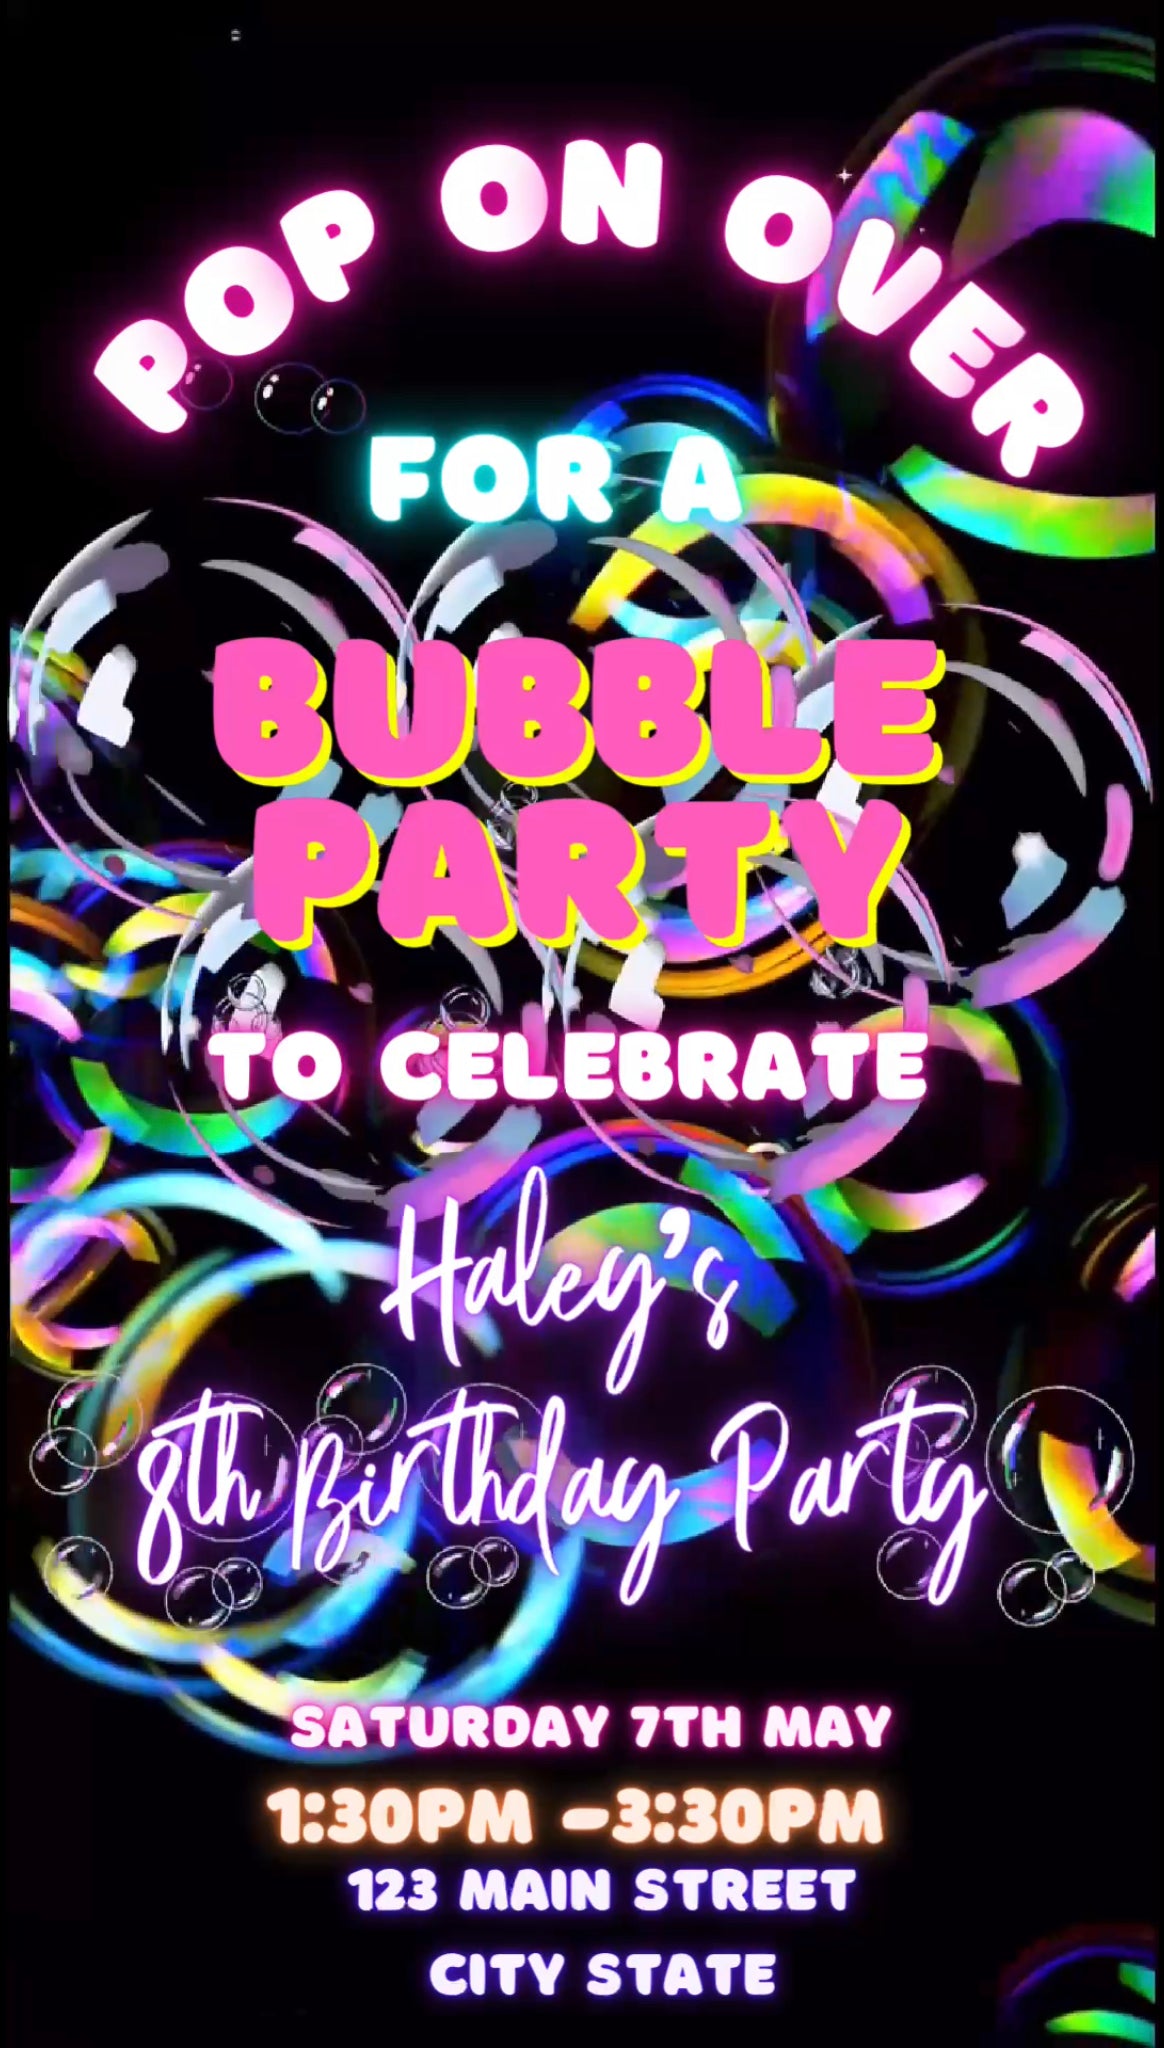 Bubbles Party Video invitation, bubbleologist birthday invitation